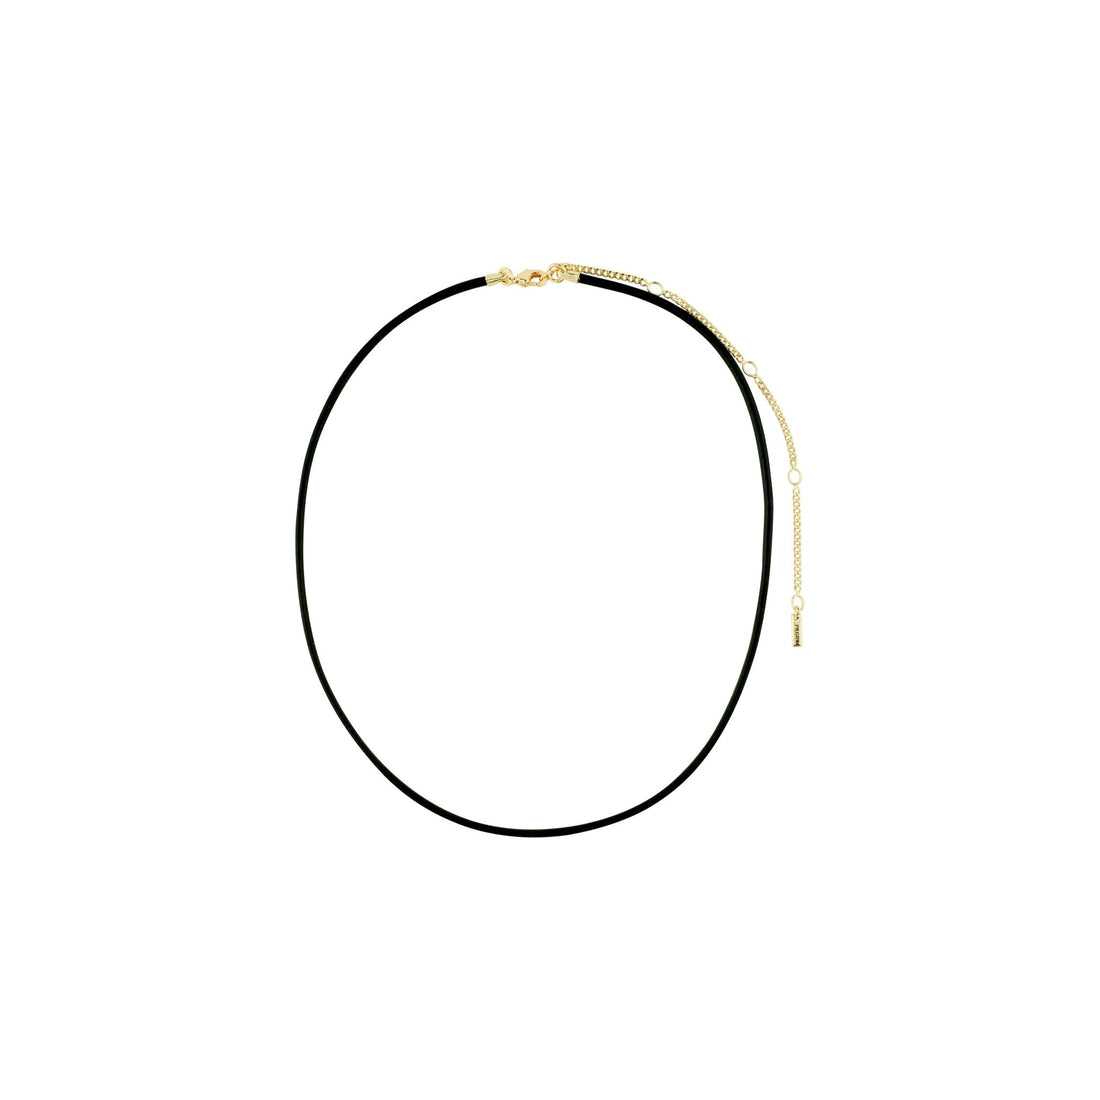 CHARM leather cord necklace - PILGRIM